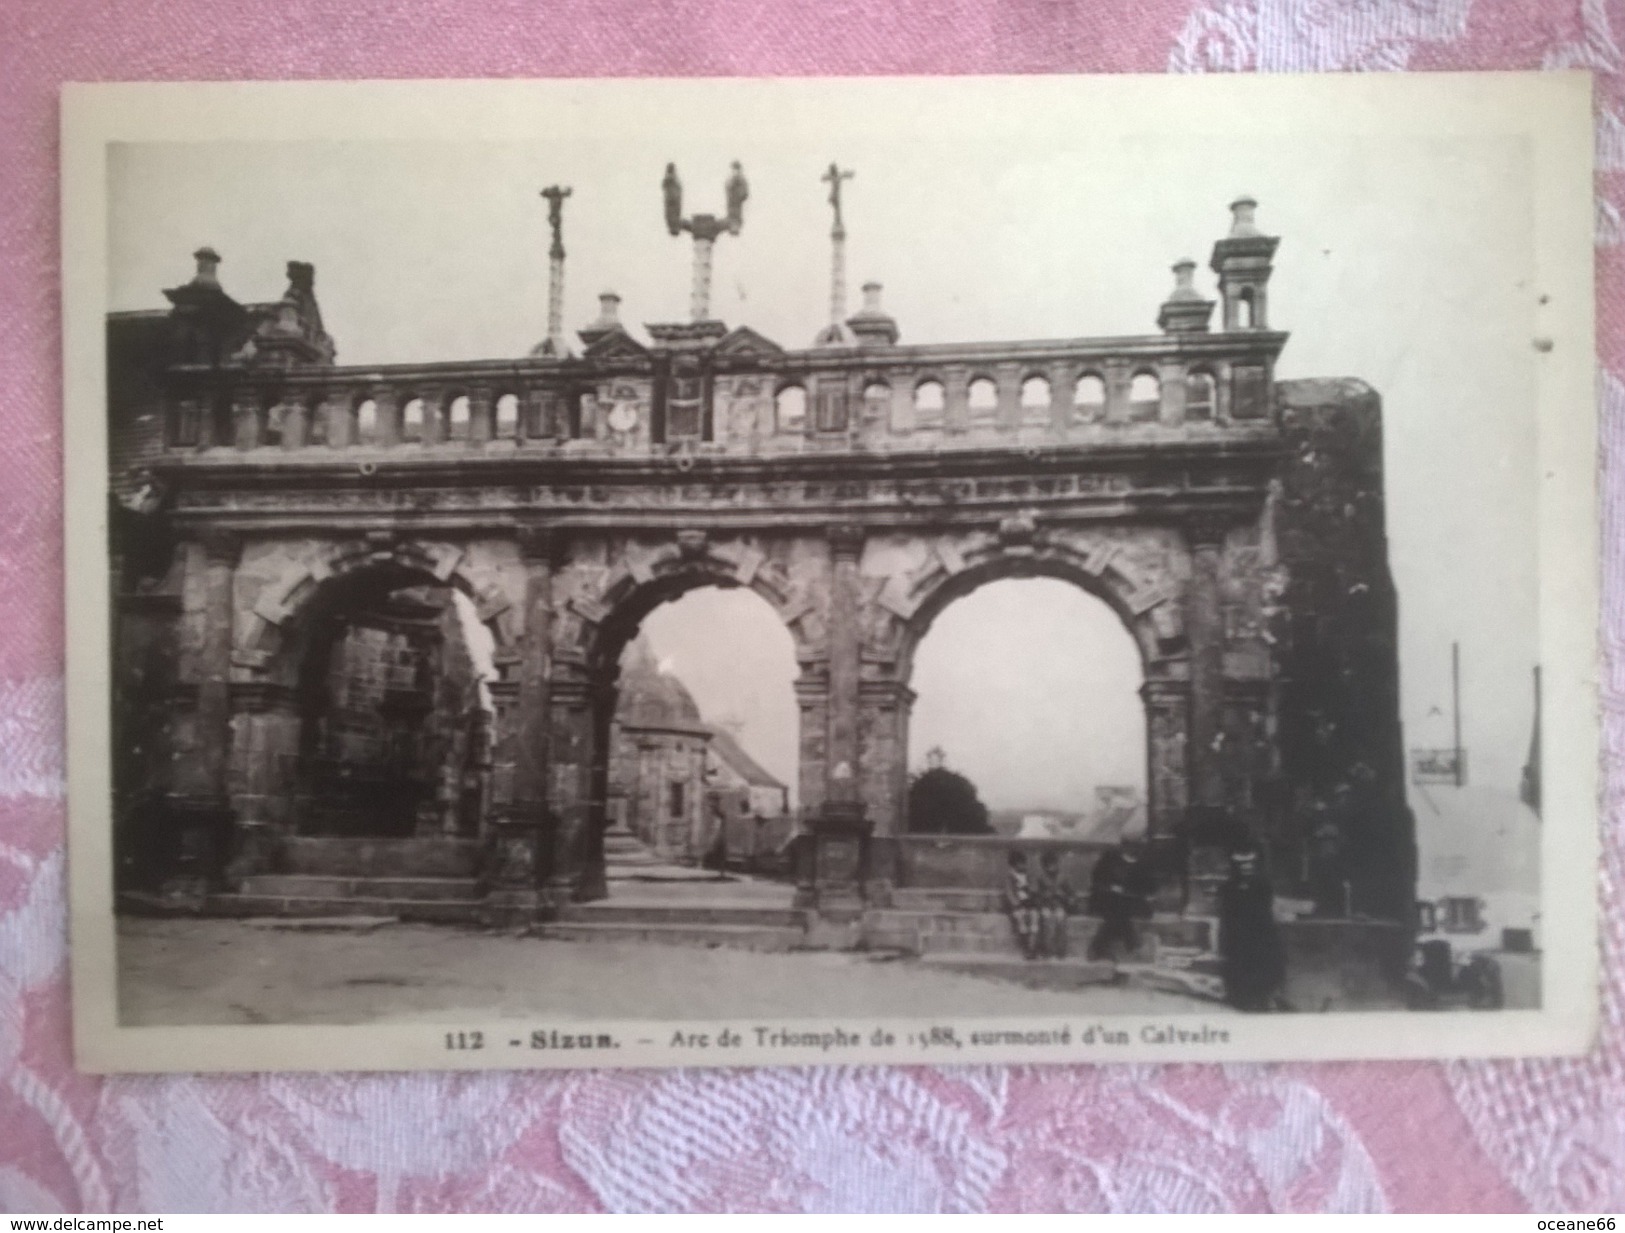 29 Sizun Arc De Triomphe De 1588, Surmonté D'un Calvaire 112 - Sizun